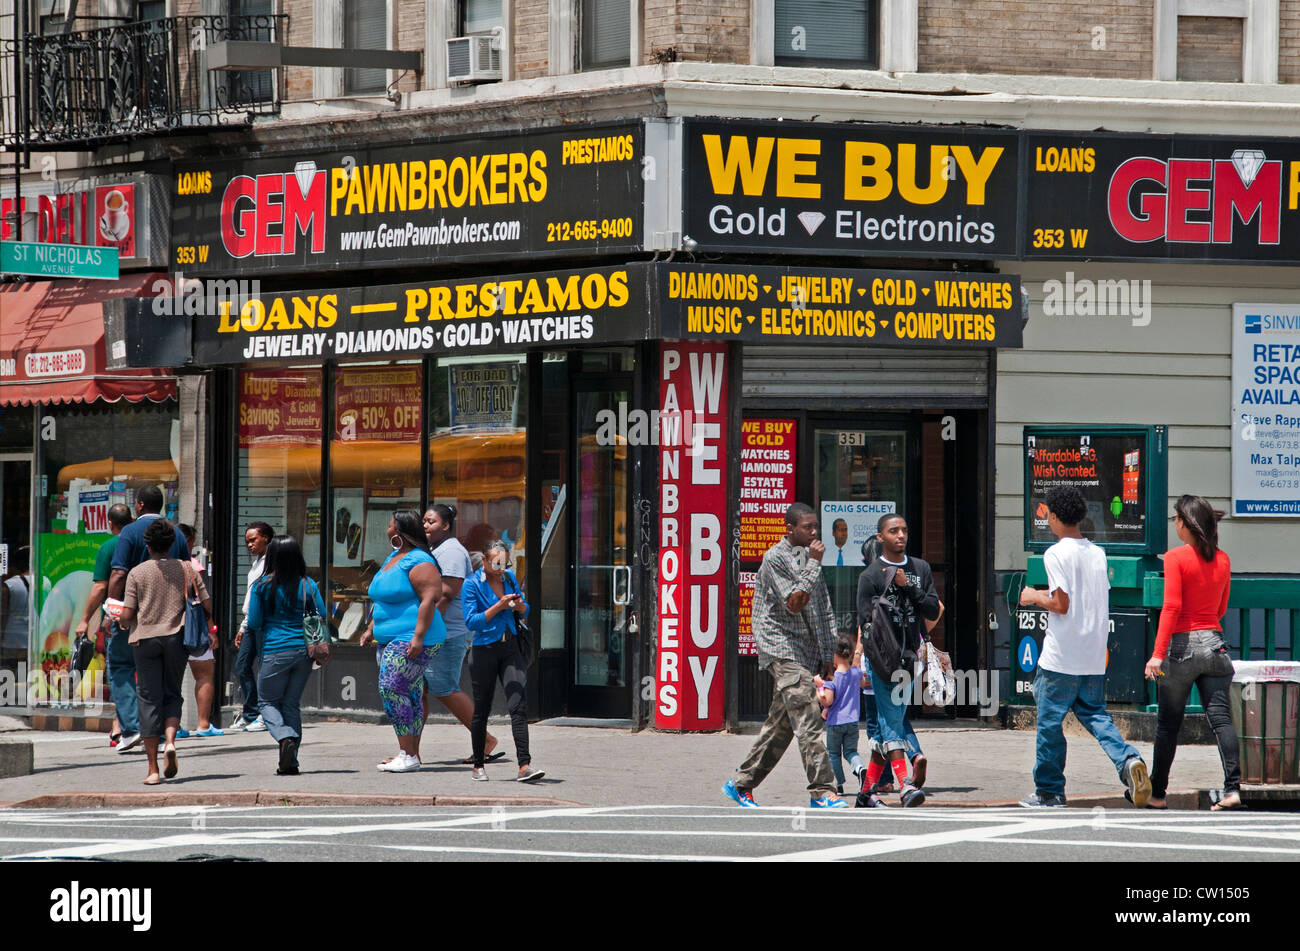 Les prêteurs sur gages pion pions Dr Martin Luther King Jr Boulevard Harlem New York Manhattan United States Banque D'Images